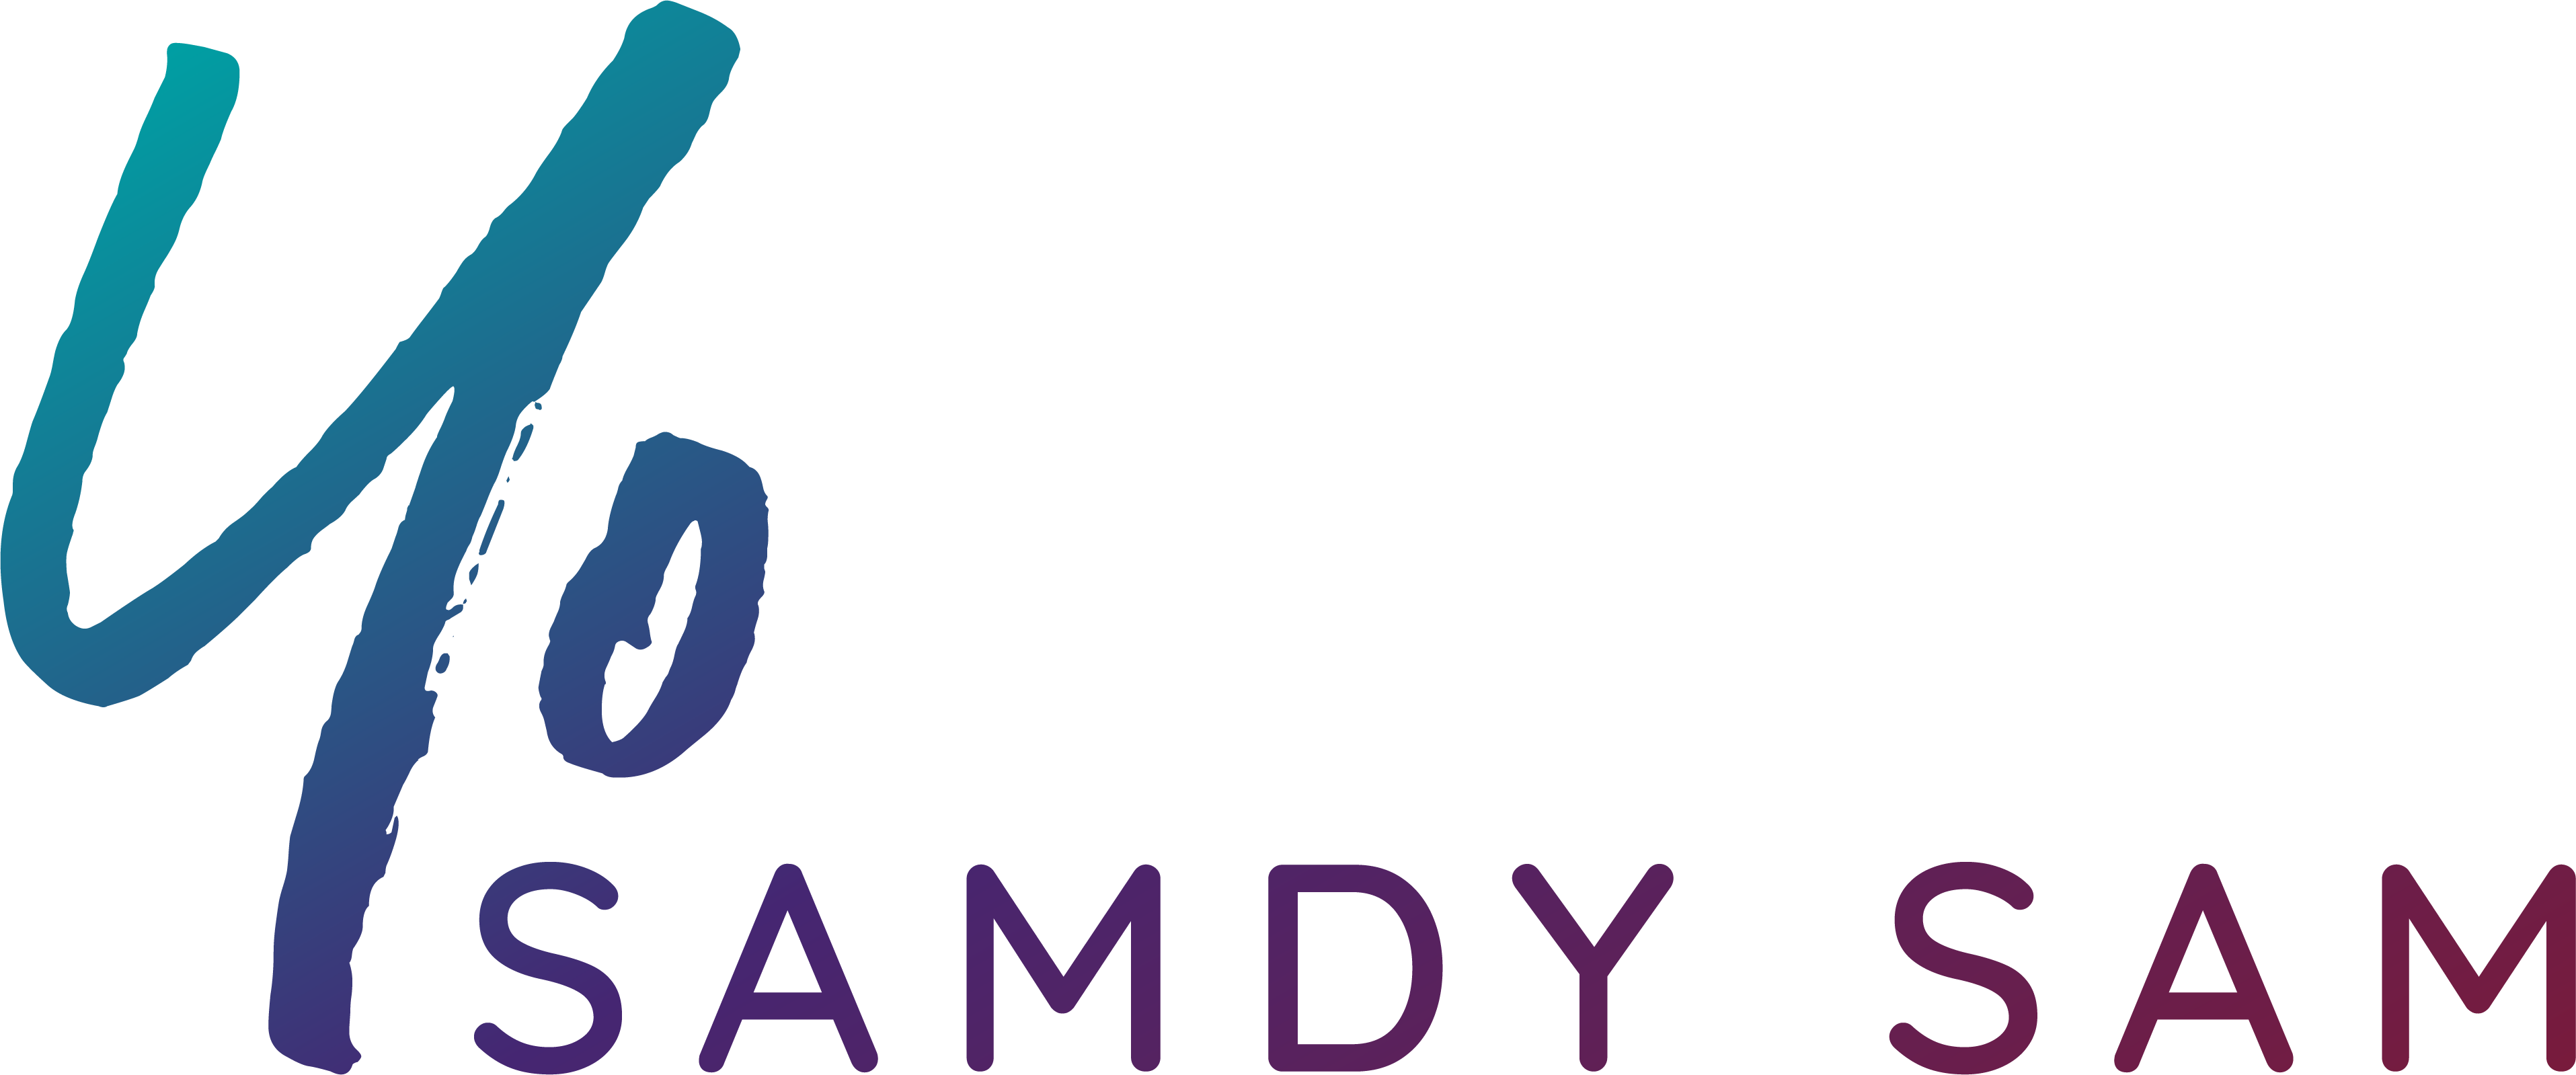 Yo Samdy Sam logo